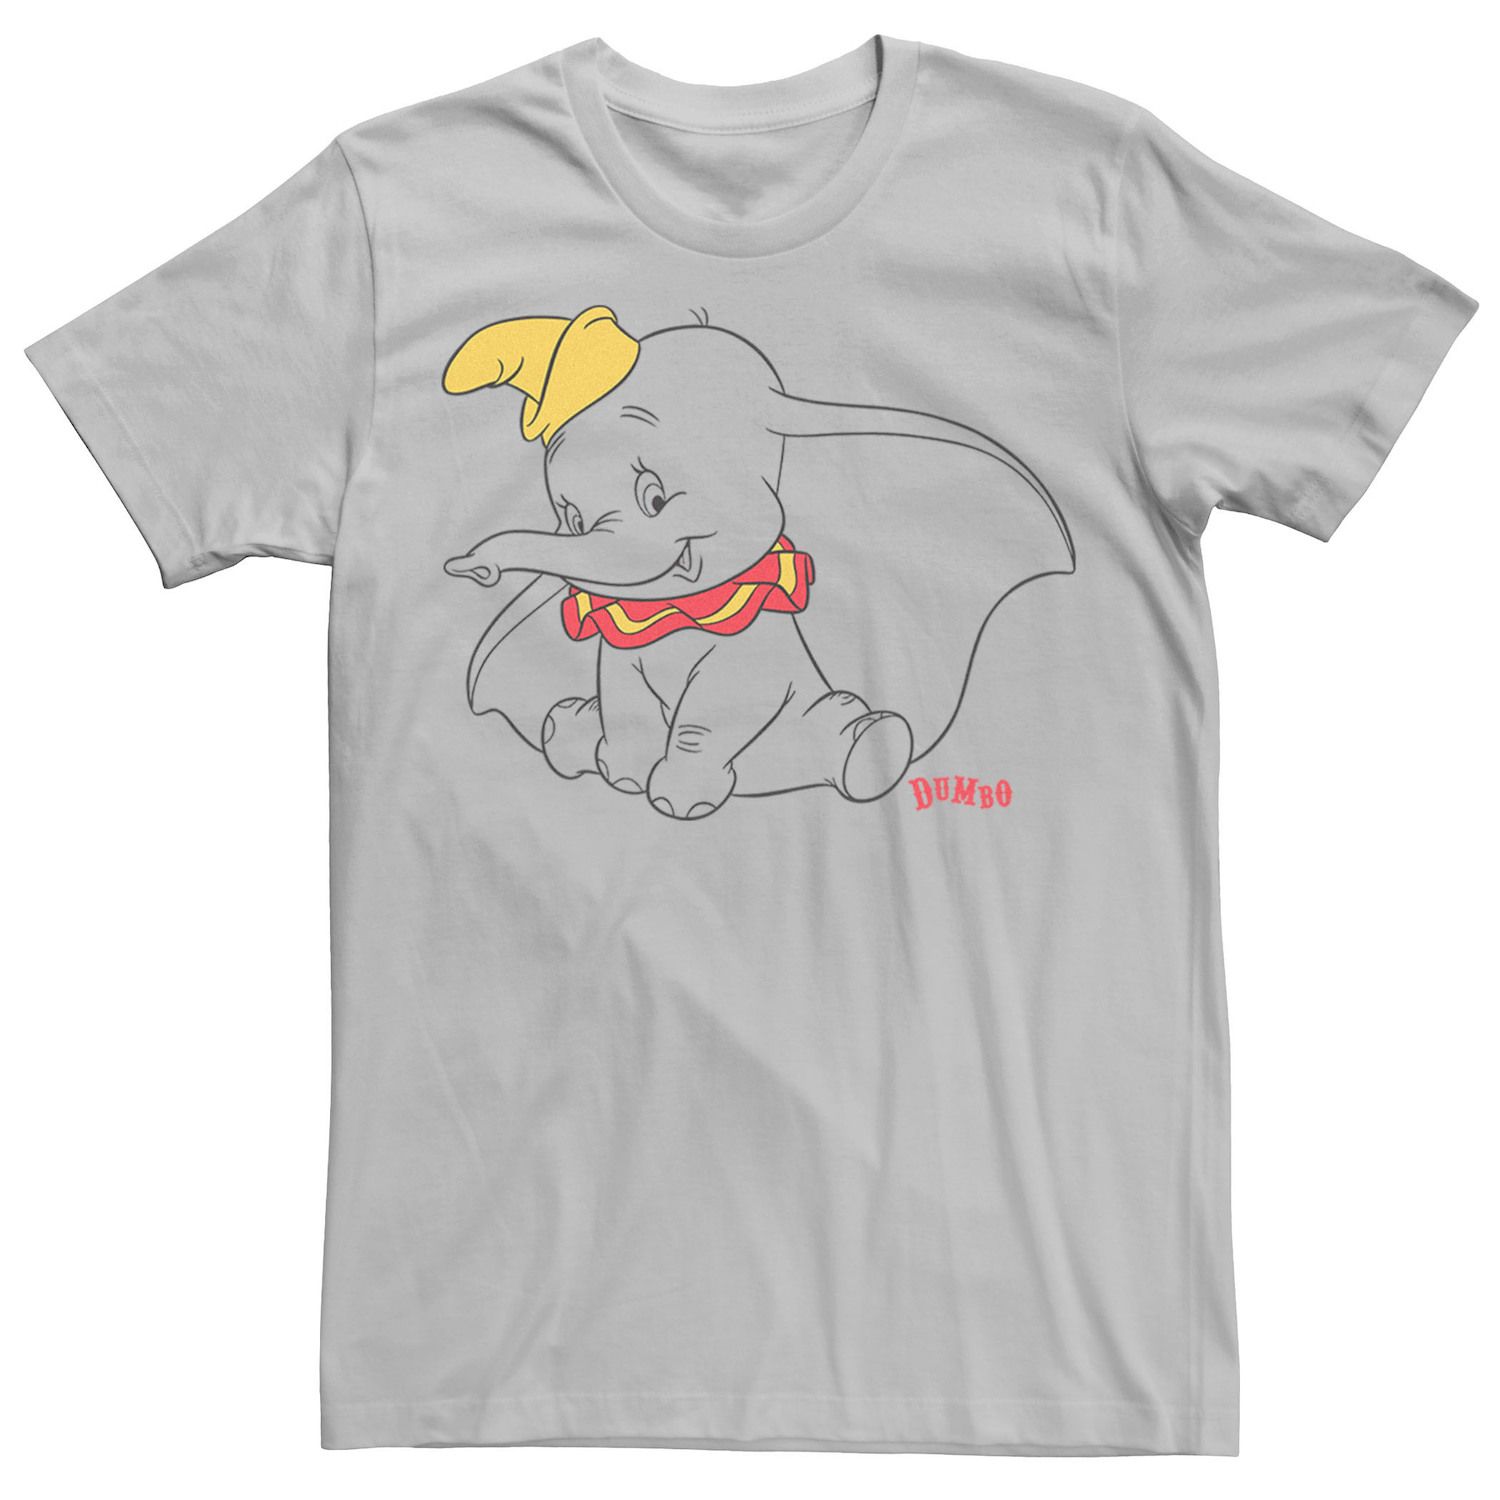 Мужская футболка с логотипом Dumbo Outline Disney, серебристый